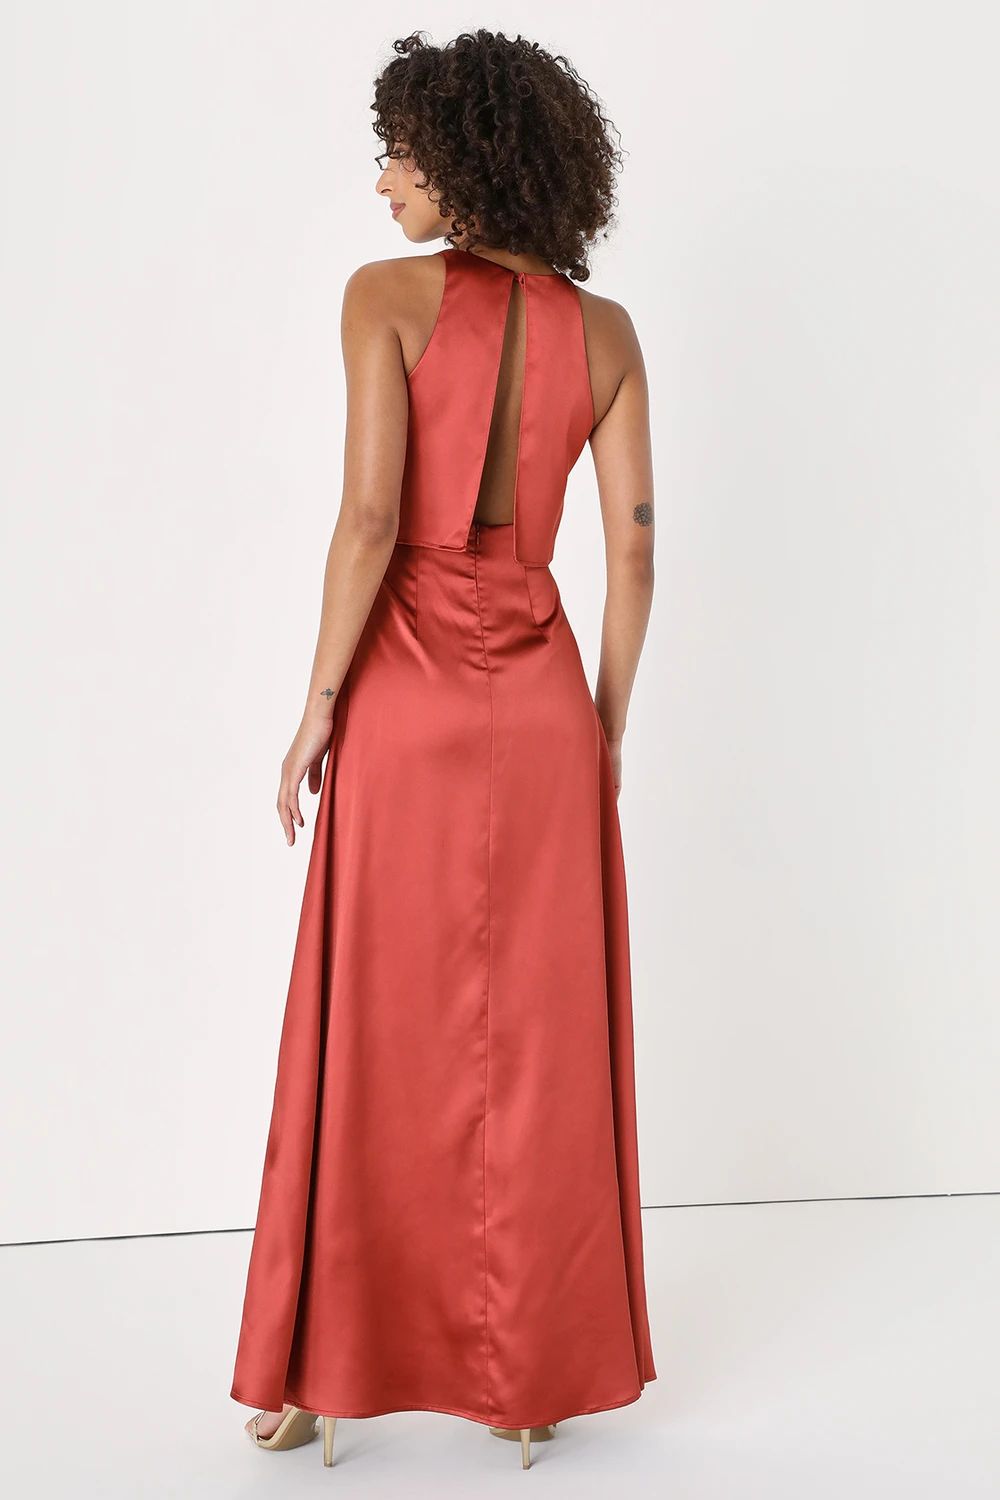 Lovely Wonder Rust Red Satin Sleeveless Maxi Dress | Lulus (US)